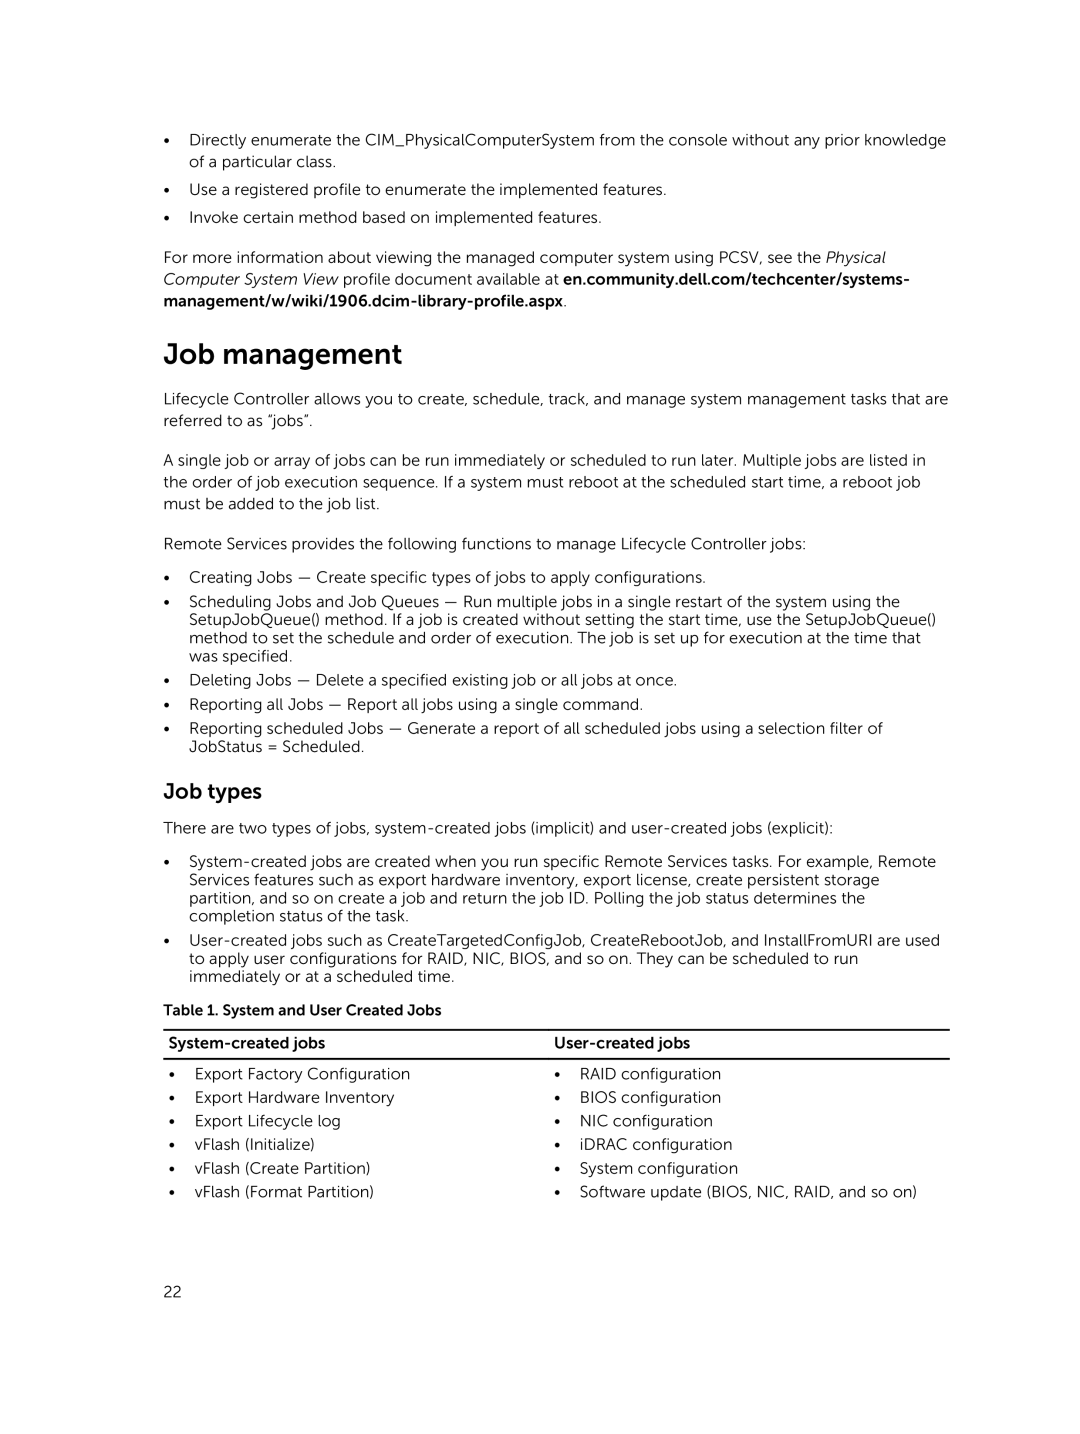 Dell v2.10.10.10 quick start Job management, Job types 